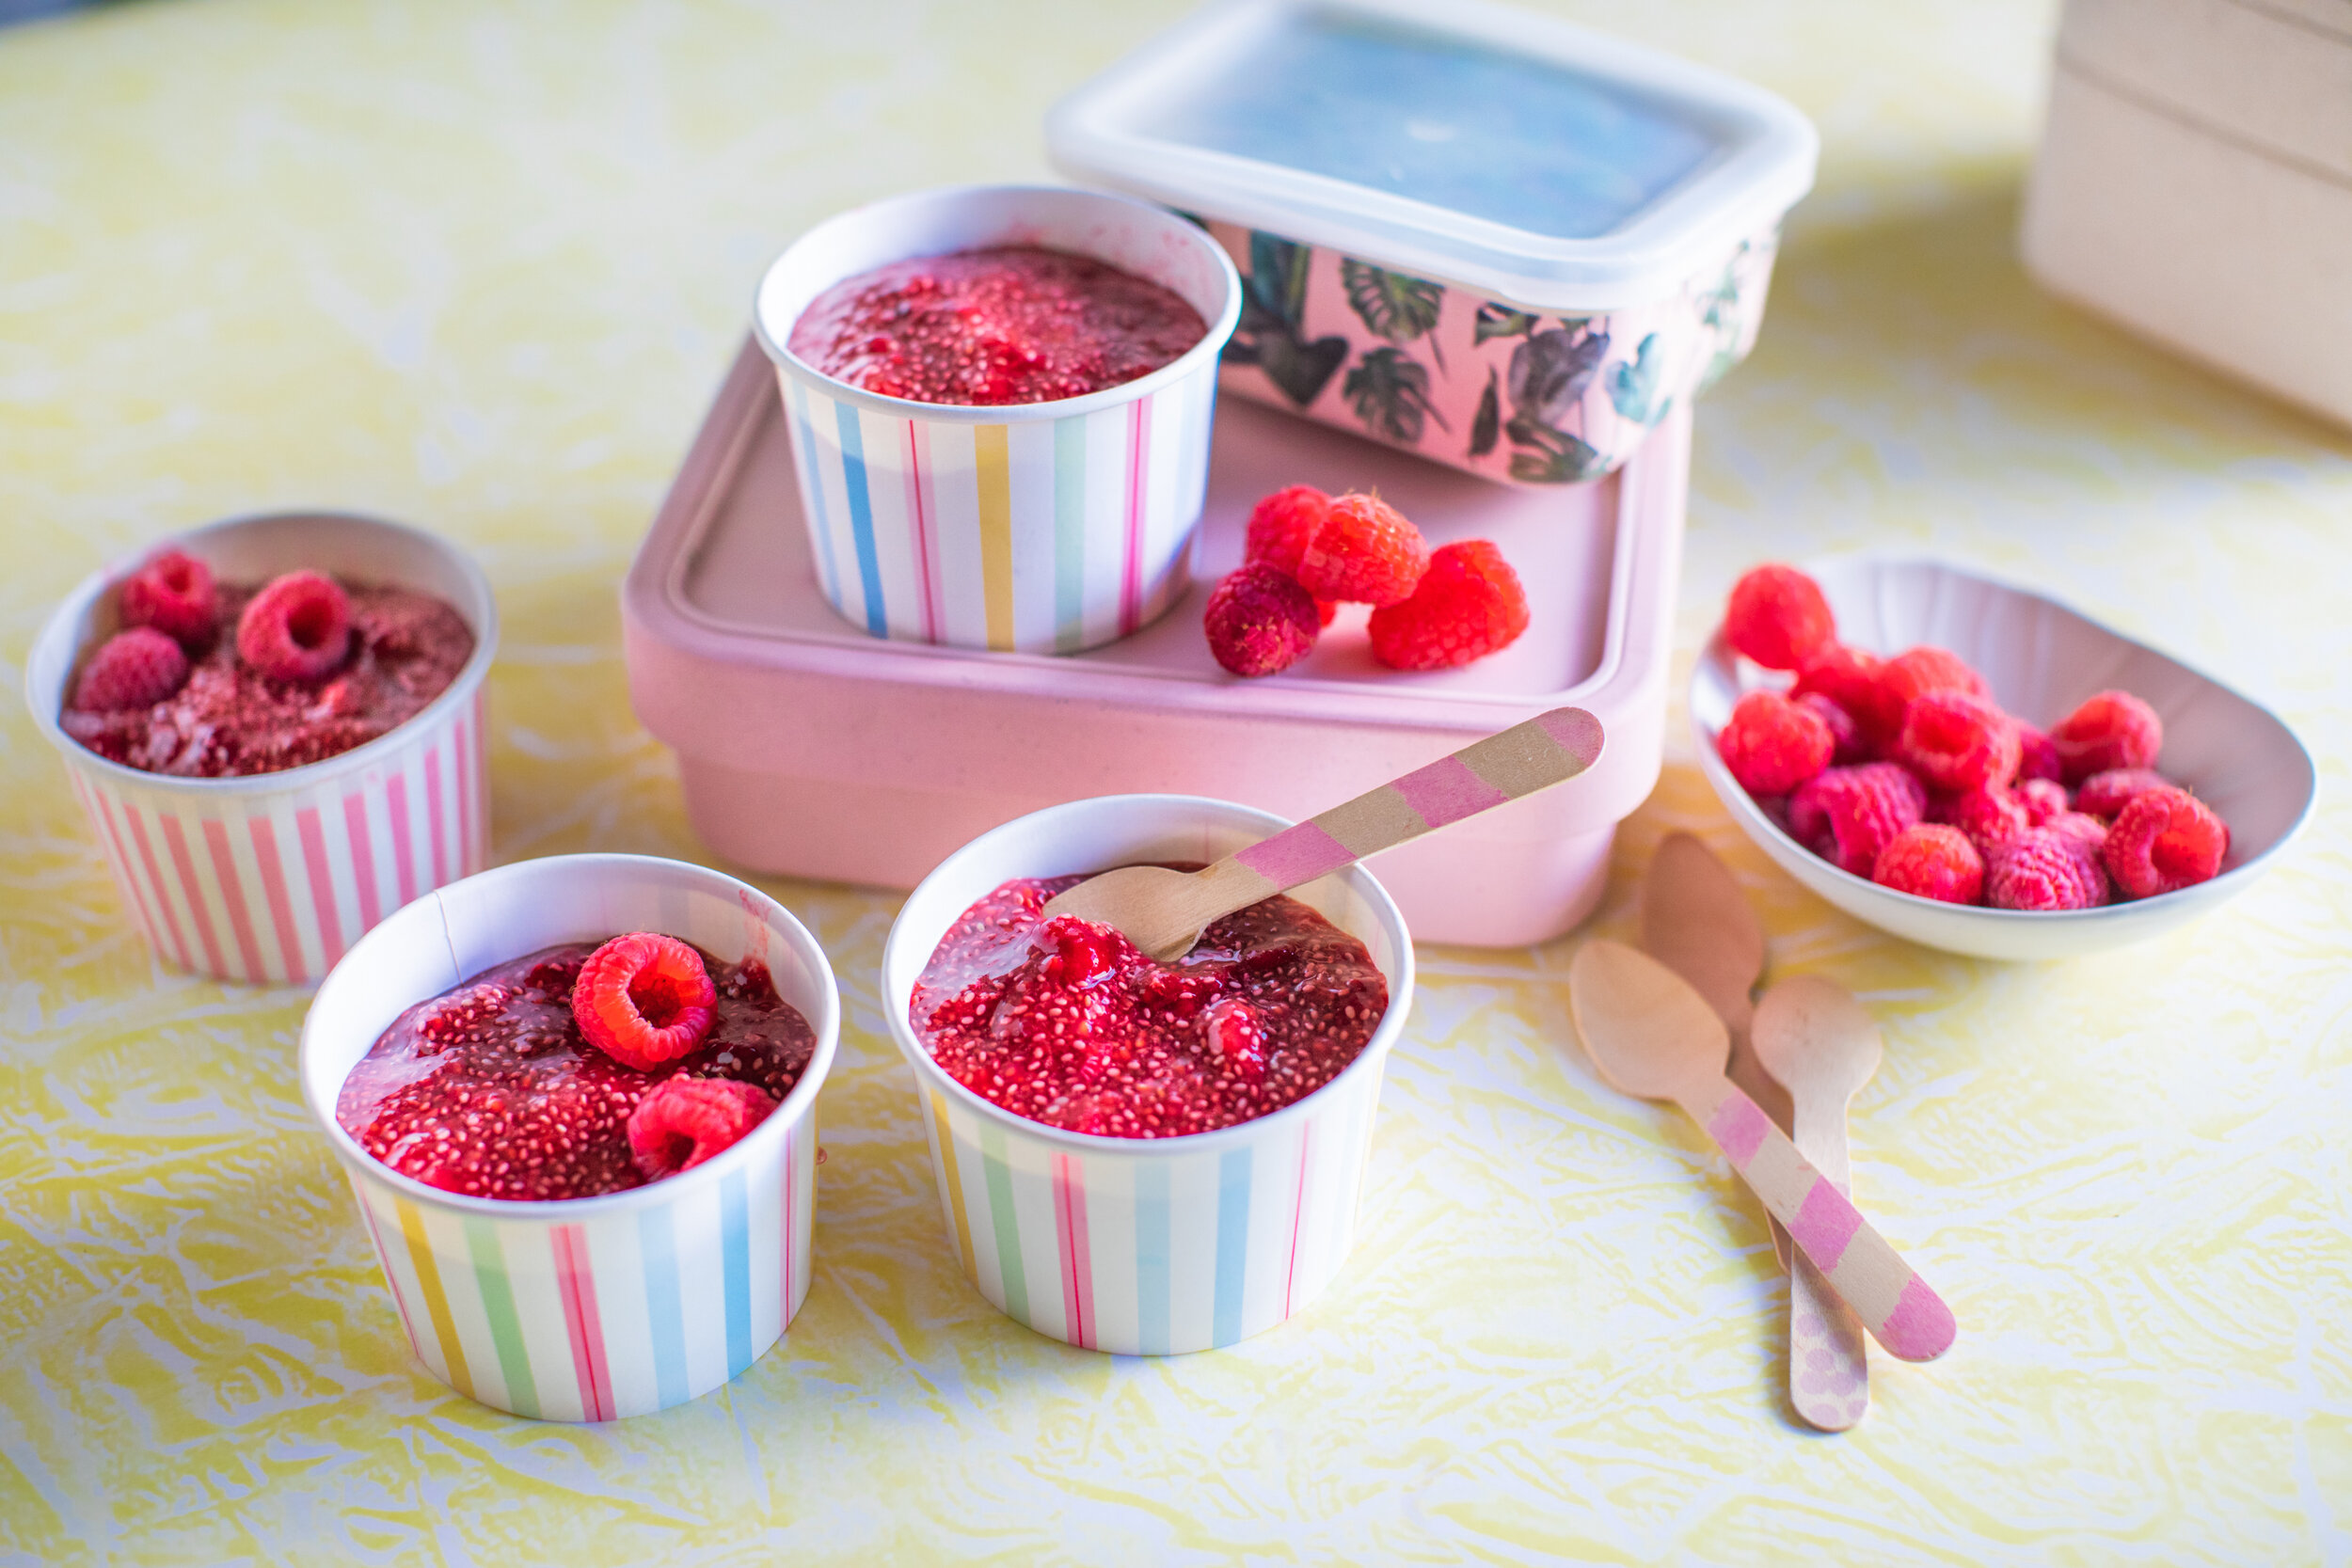 Raspberry 'Jam' Pudding